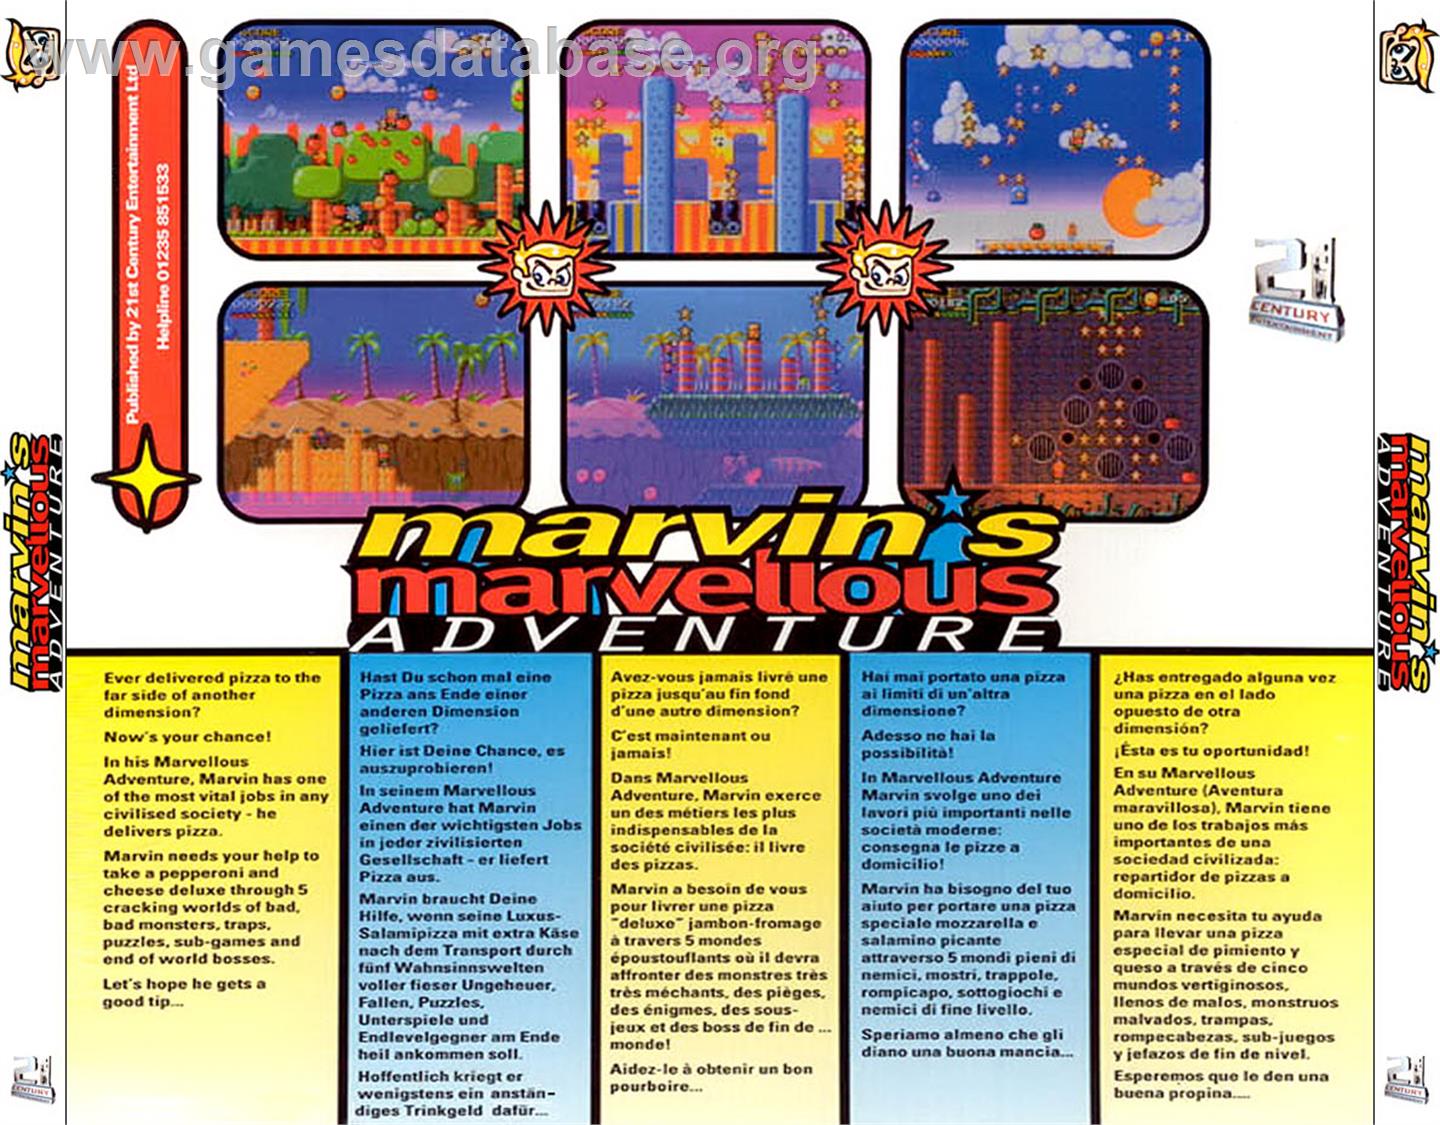 Marvin's Marvellous Adventure - Commodore Amiga CD32 - Artwork - Box Back